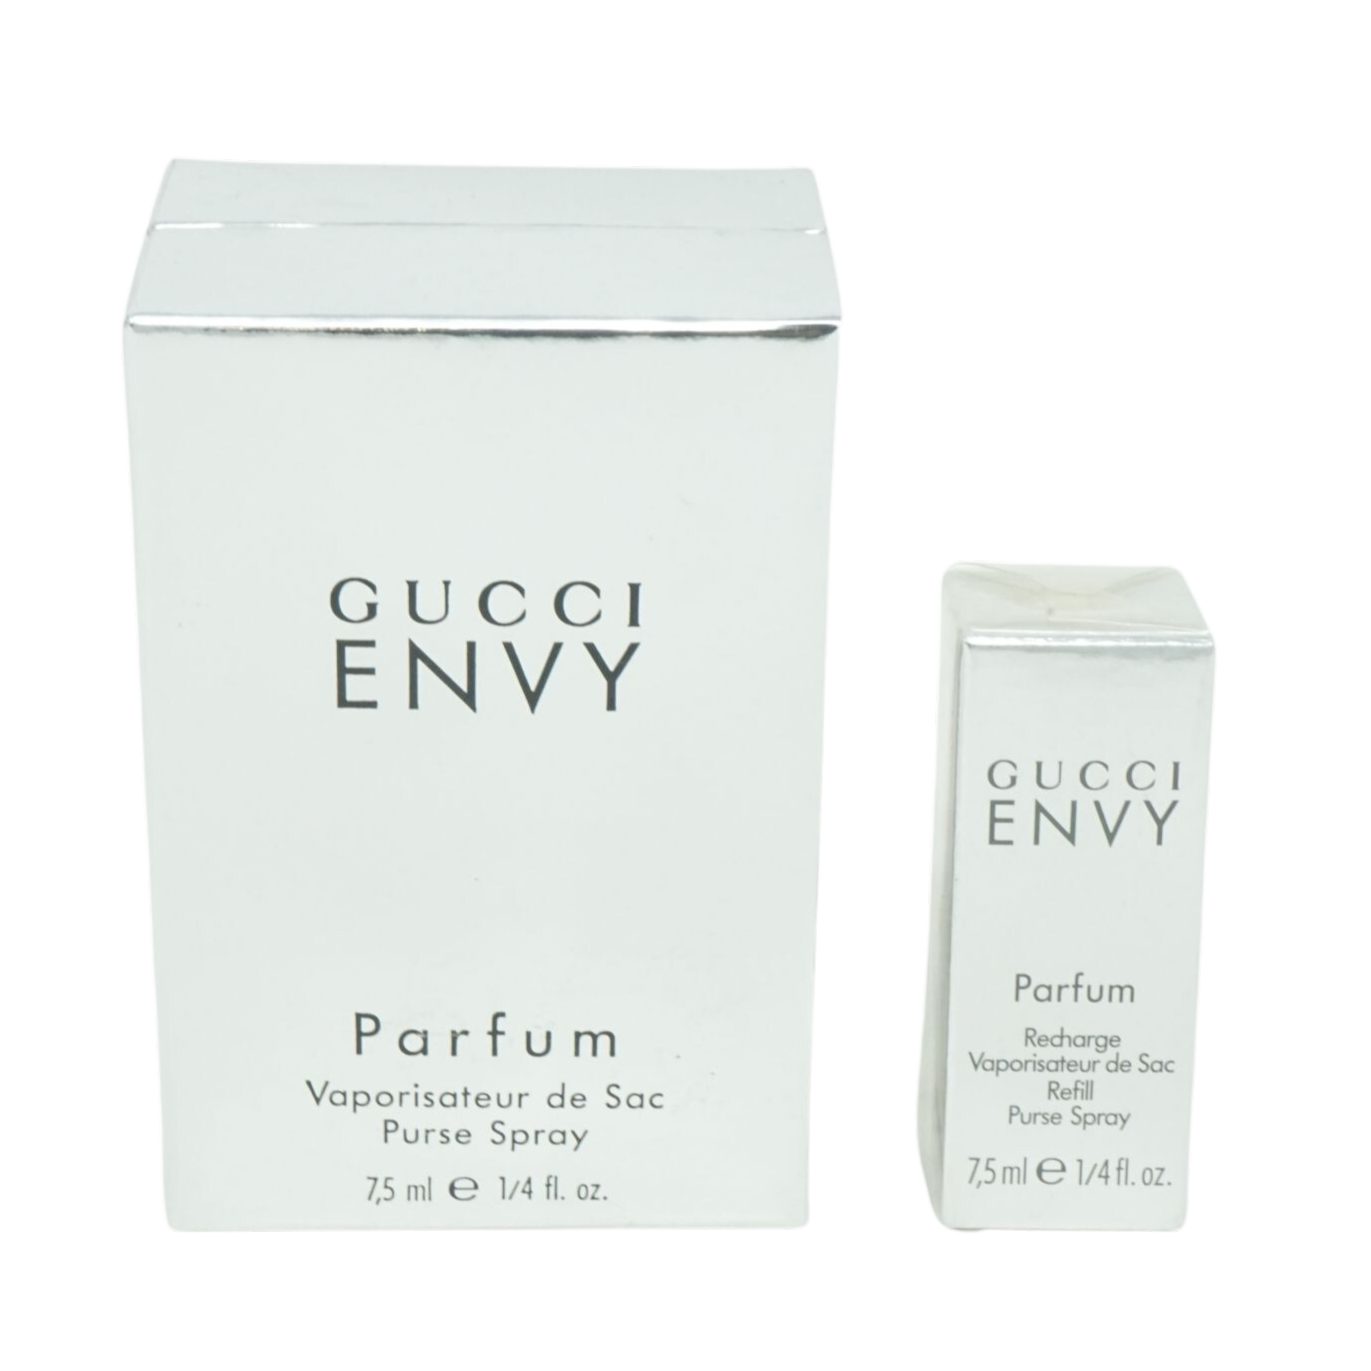 Gucci ENVY 7,5ml Parfum GUCCI Extrait Purse Spray Parfum / Bijou Extrait